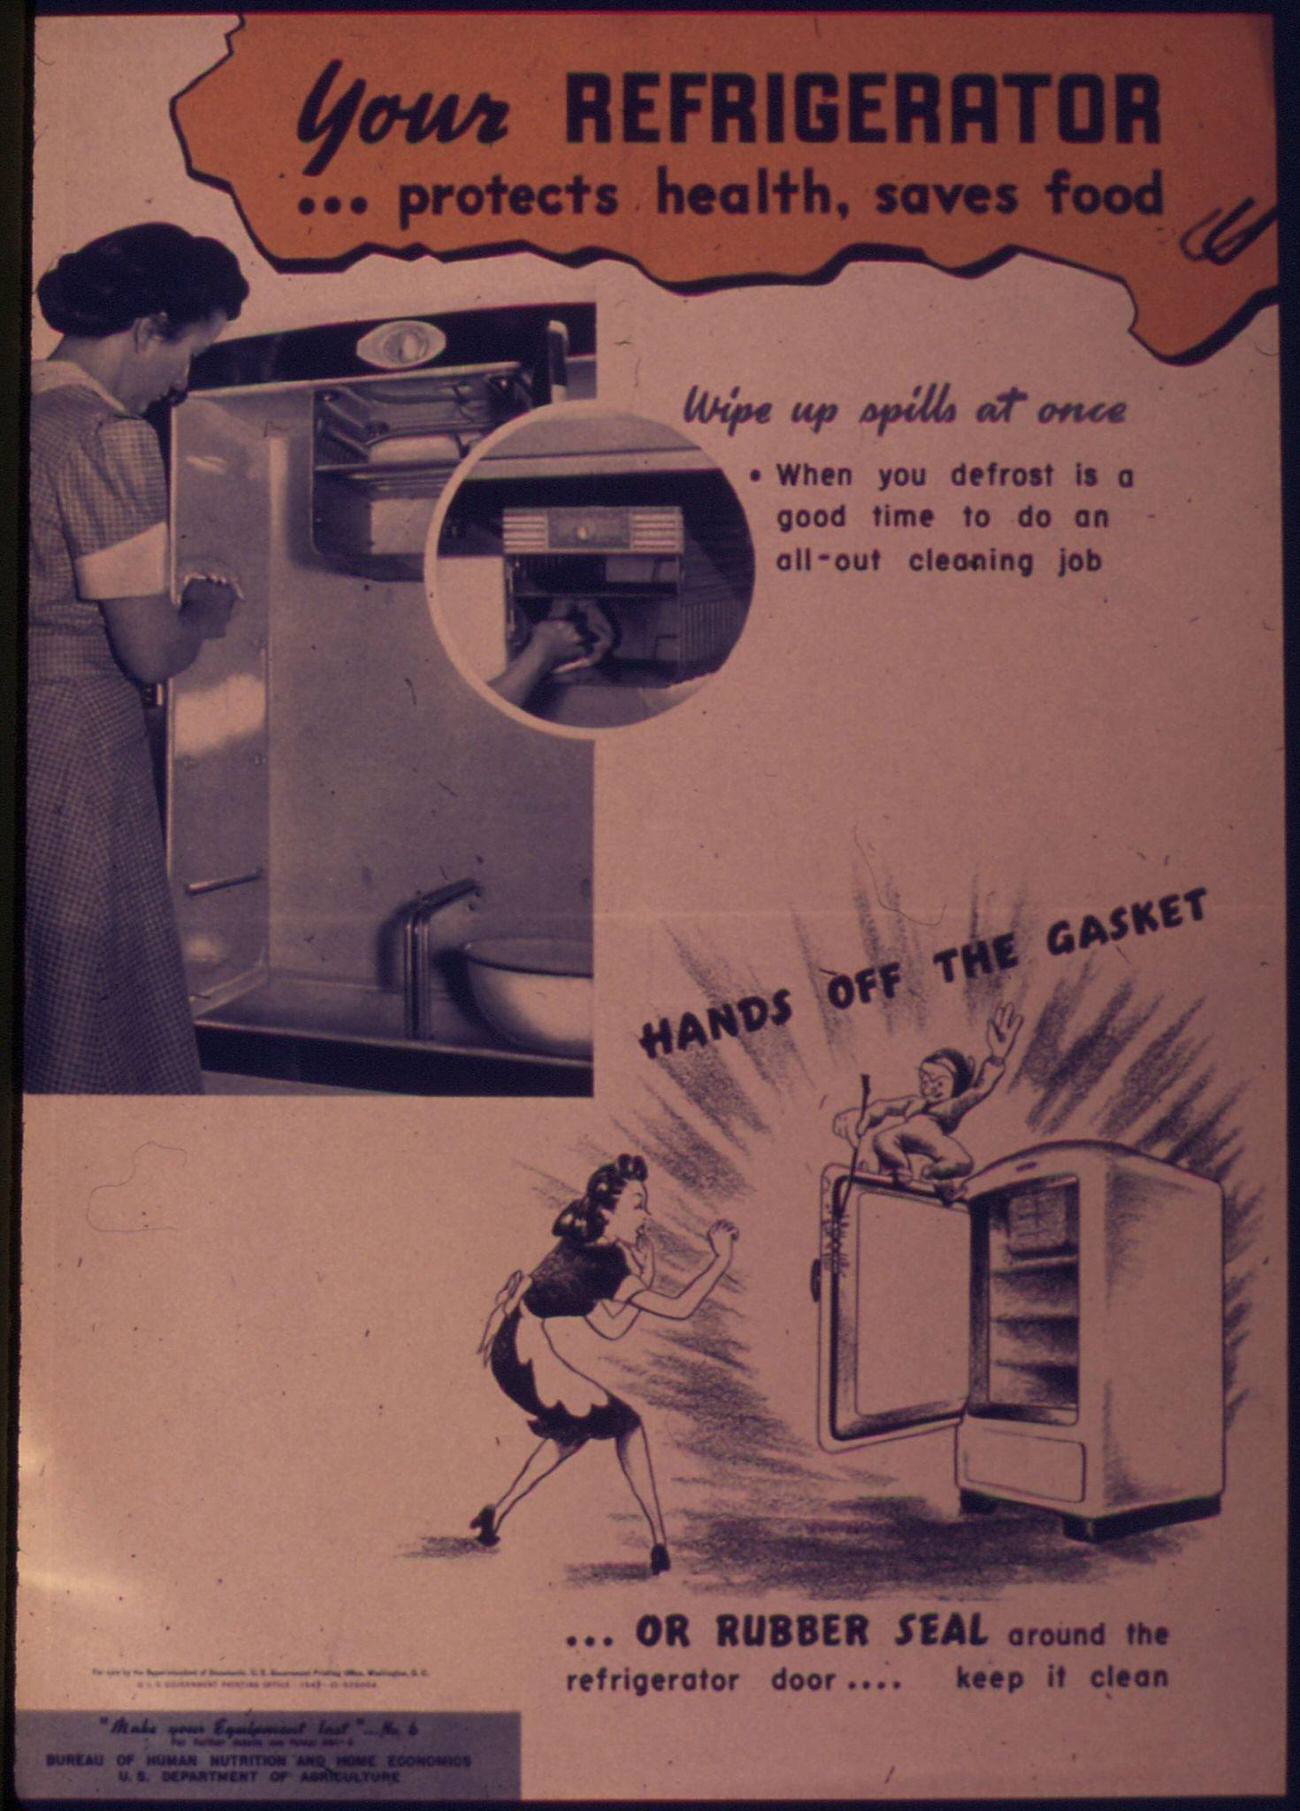 WWII refrigerator ad, College Park, Maryland, 1942.